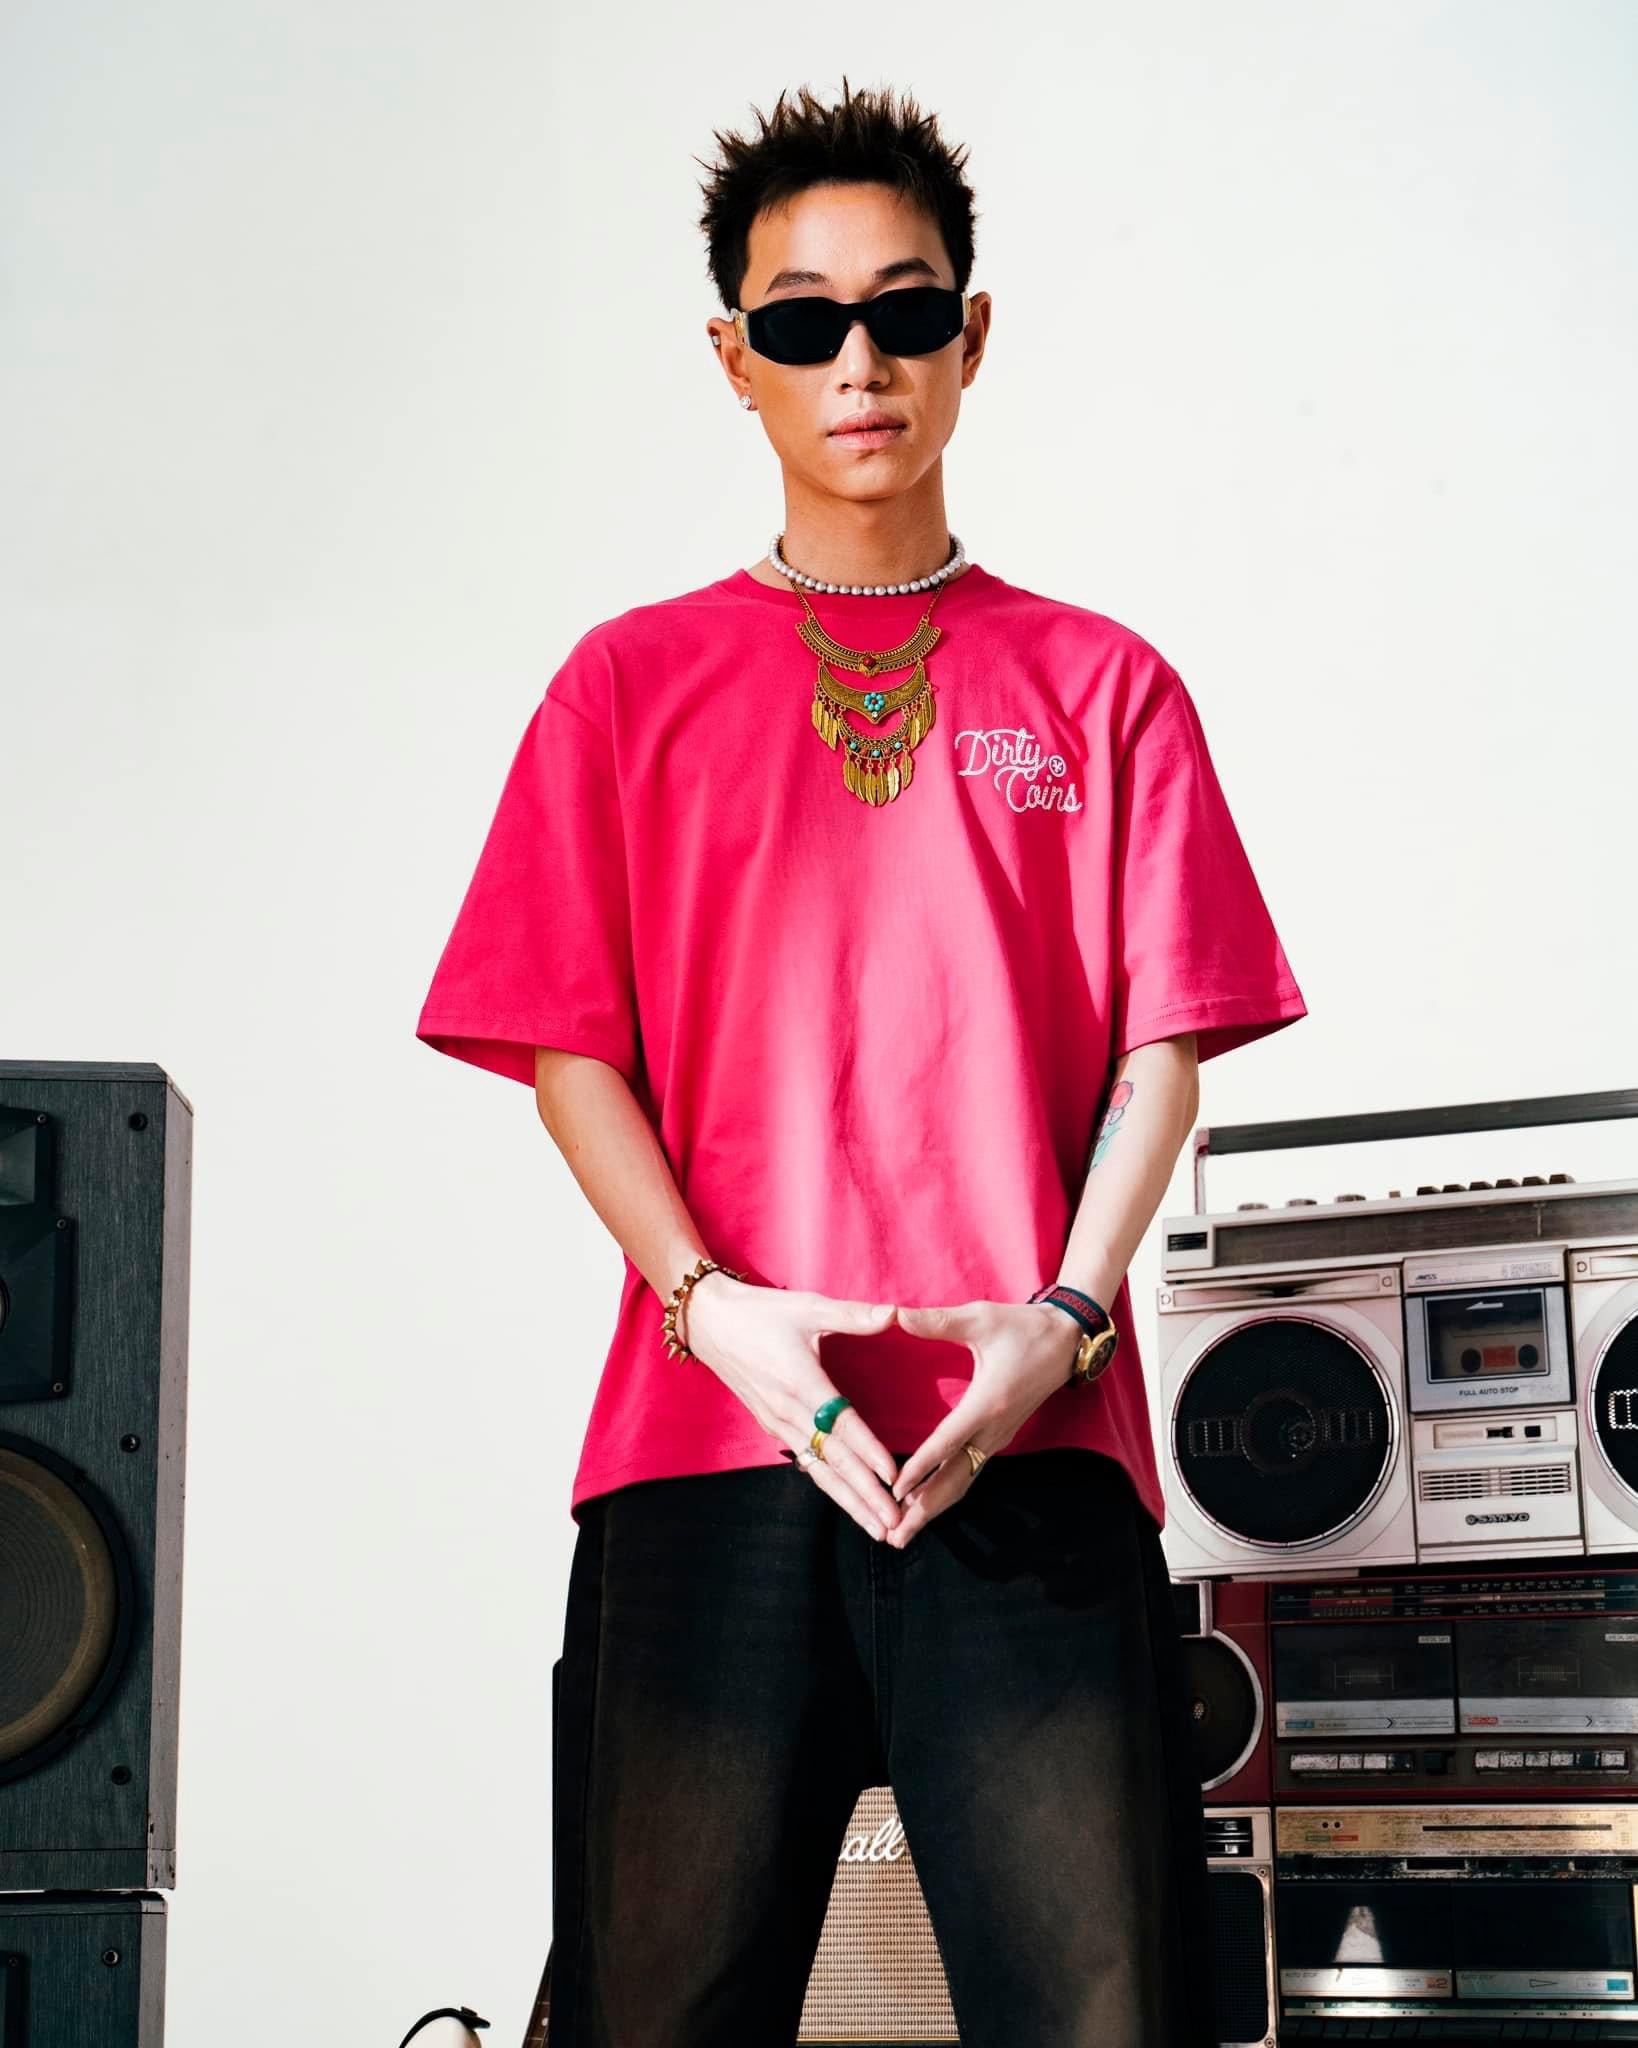 Flannel Shirt - từ Workwear tới Streetwear - DirtyCoins | VIETNAMESE  STREETWEAR BRAND